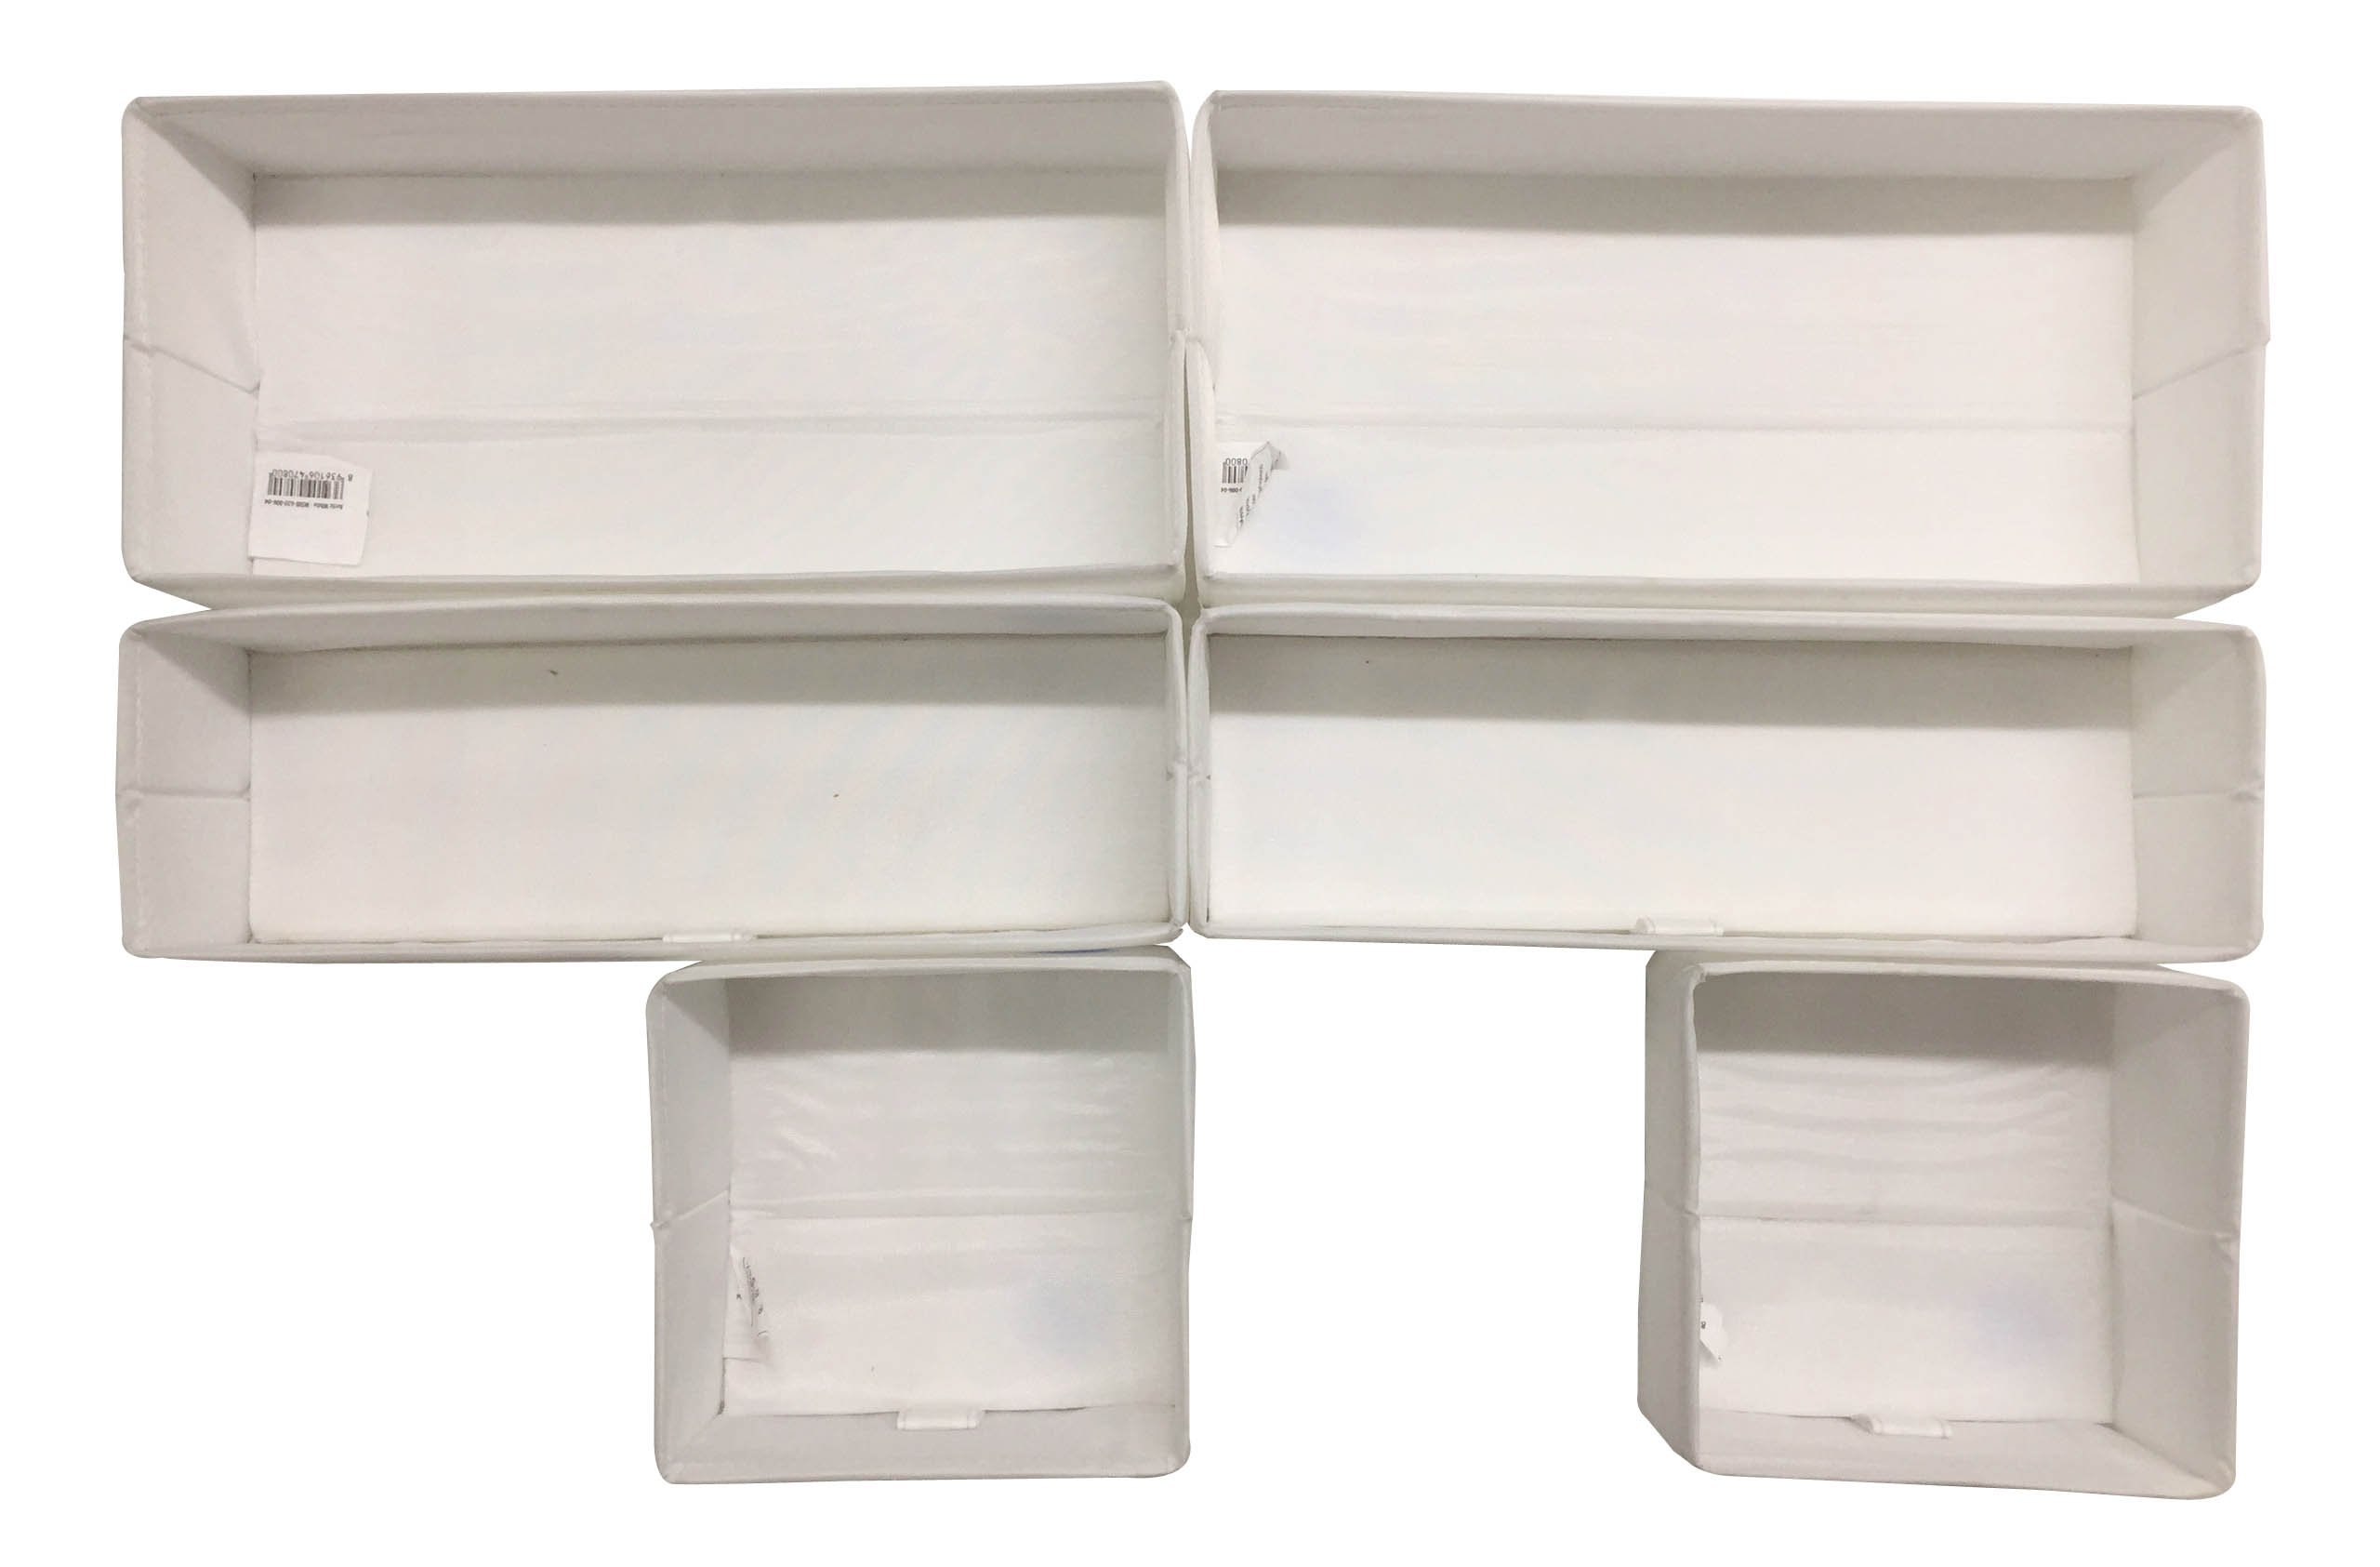 Mainstays White Fabric Drawer Organizer Set, 6 Total Bins, 3 Sizes - image 3 of 5